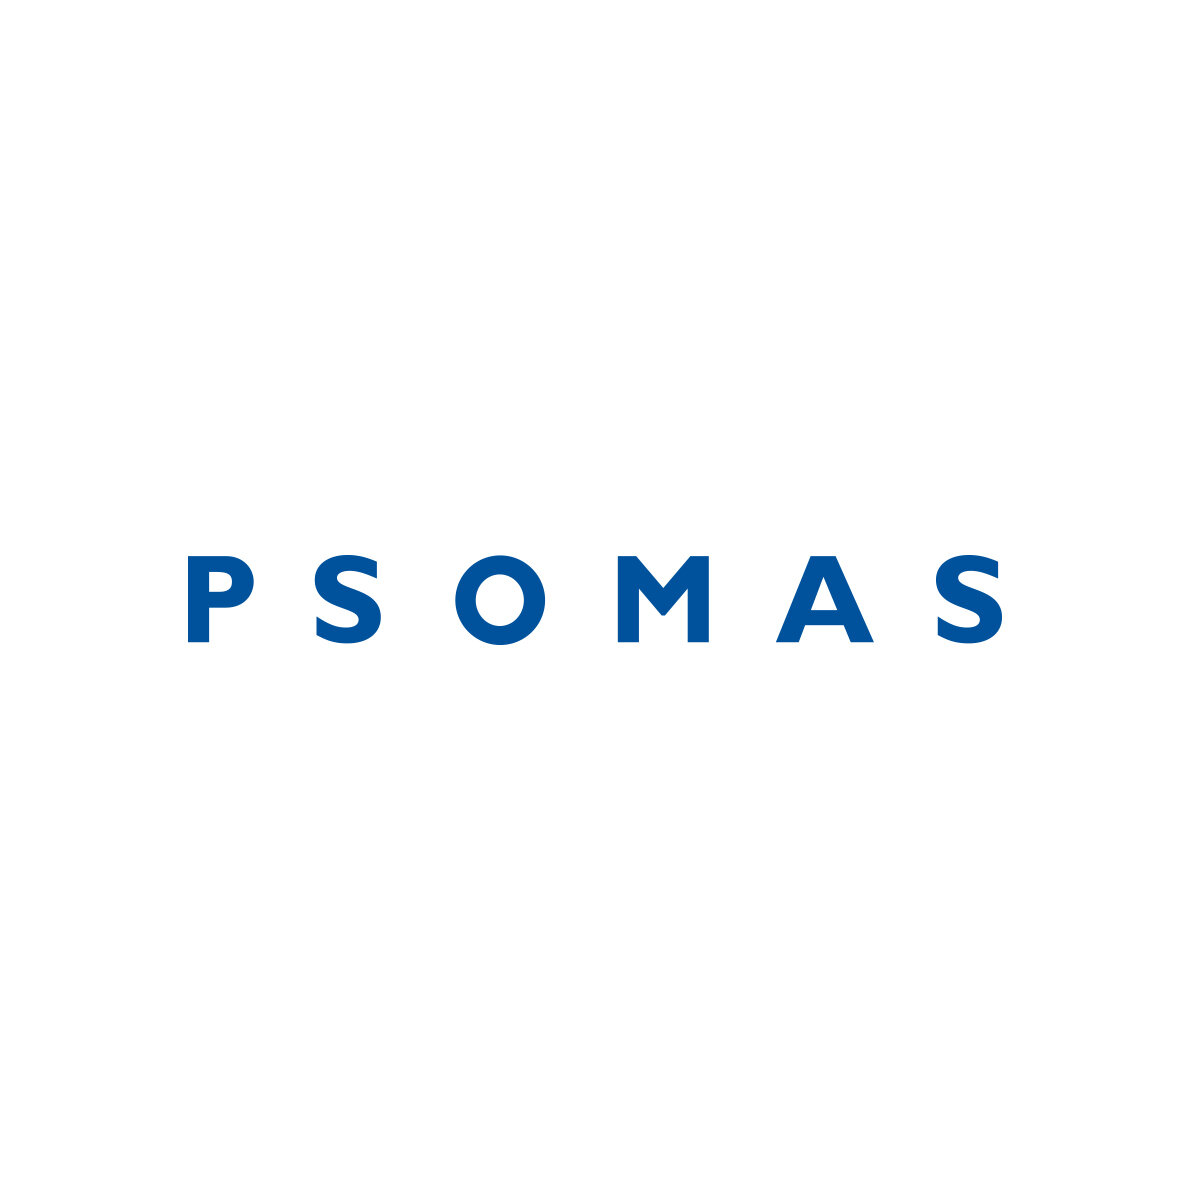 PSOMAS logo.jpg